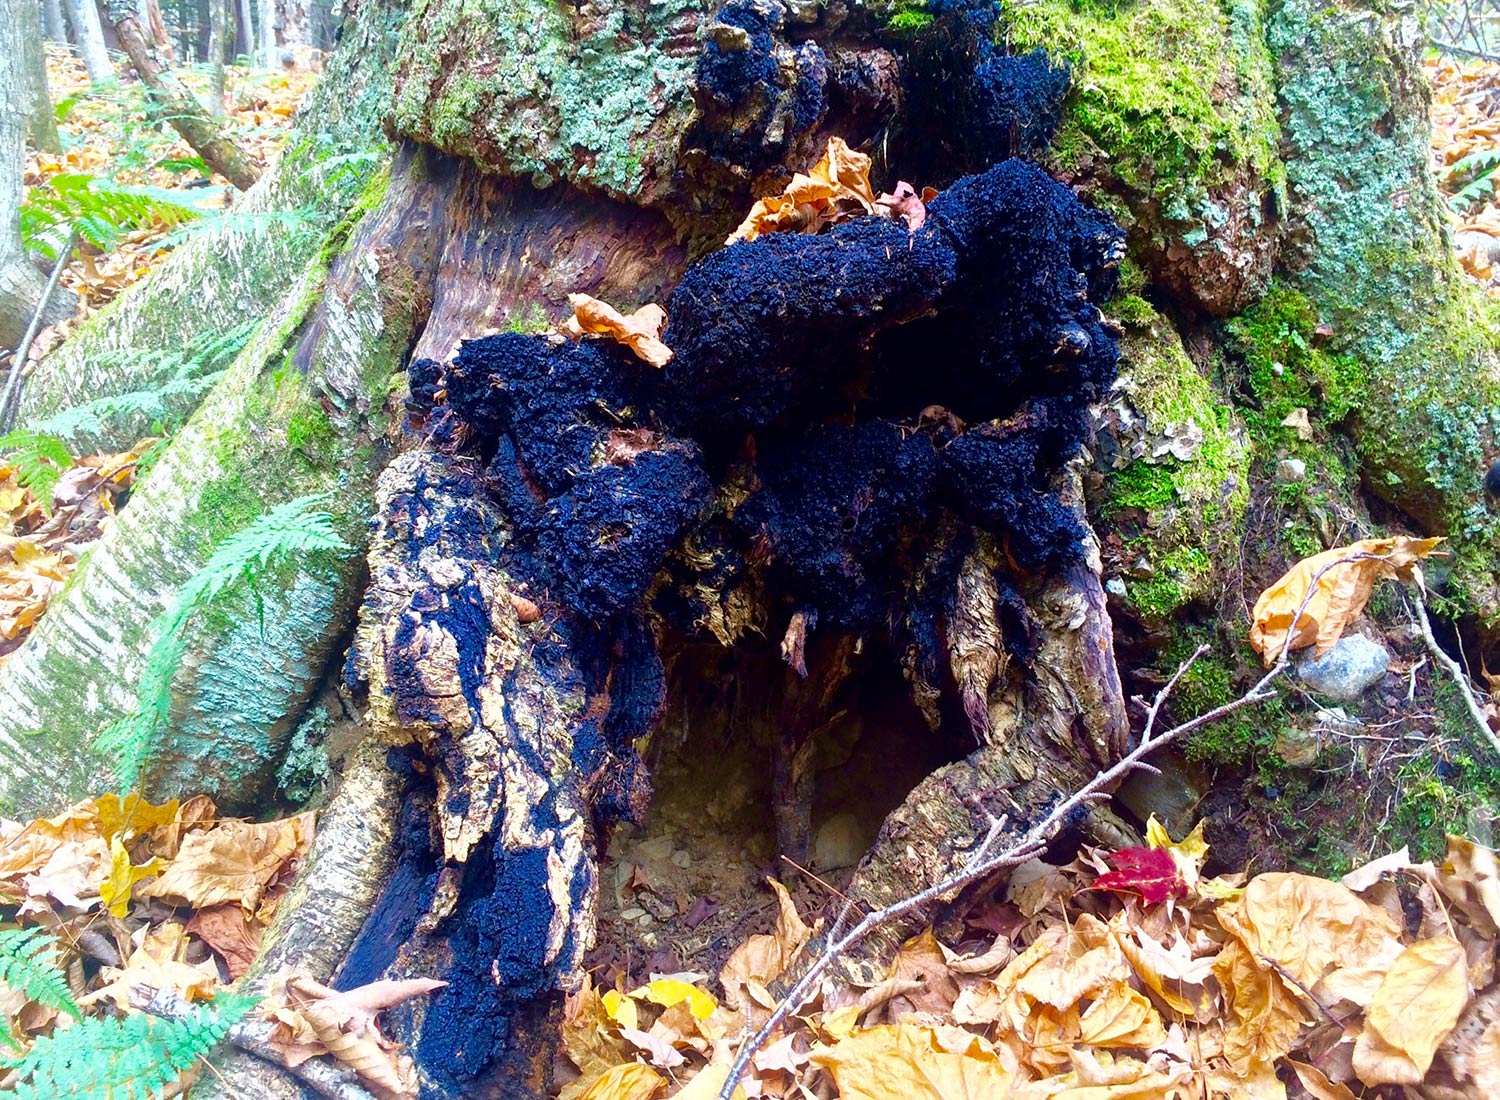 SHO Farm: vegan wild farming in a cold climate | medicinal chaga mushroom on a living birch tree